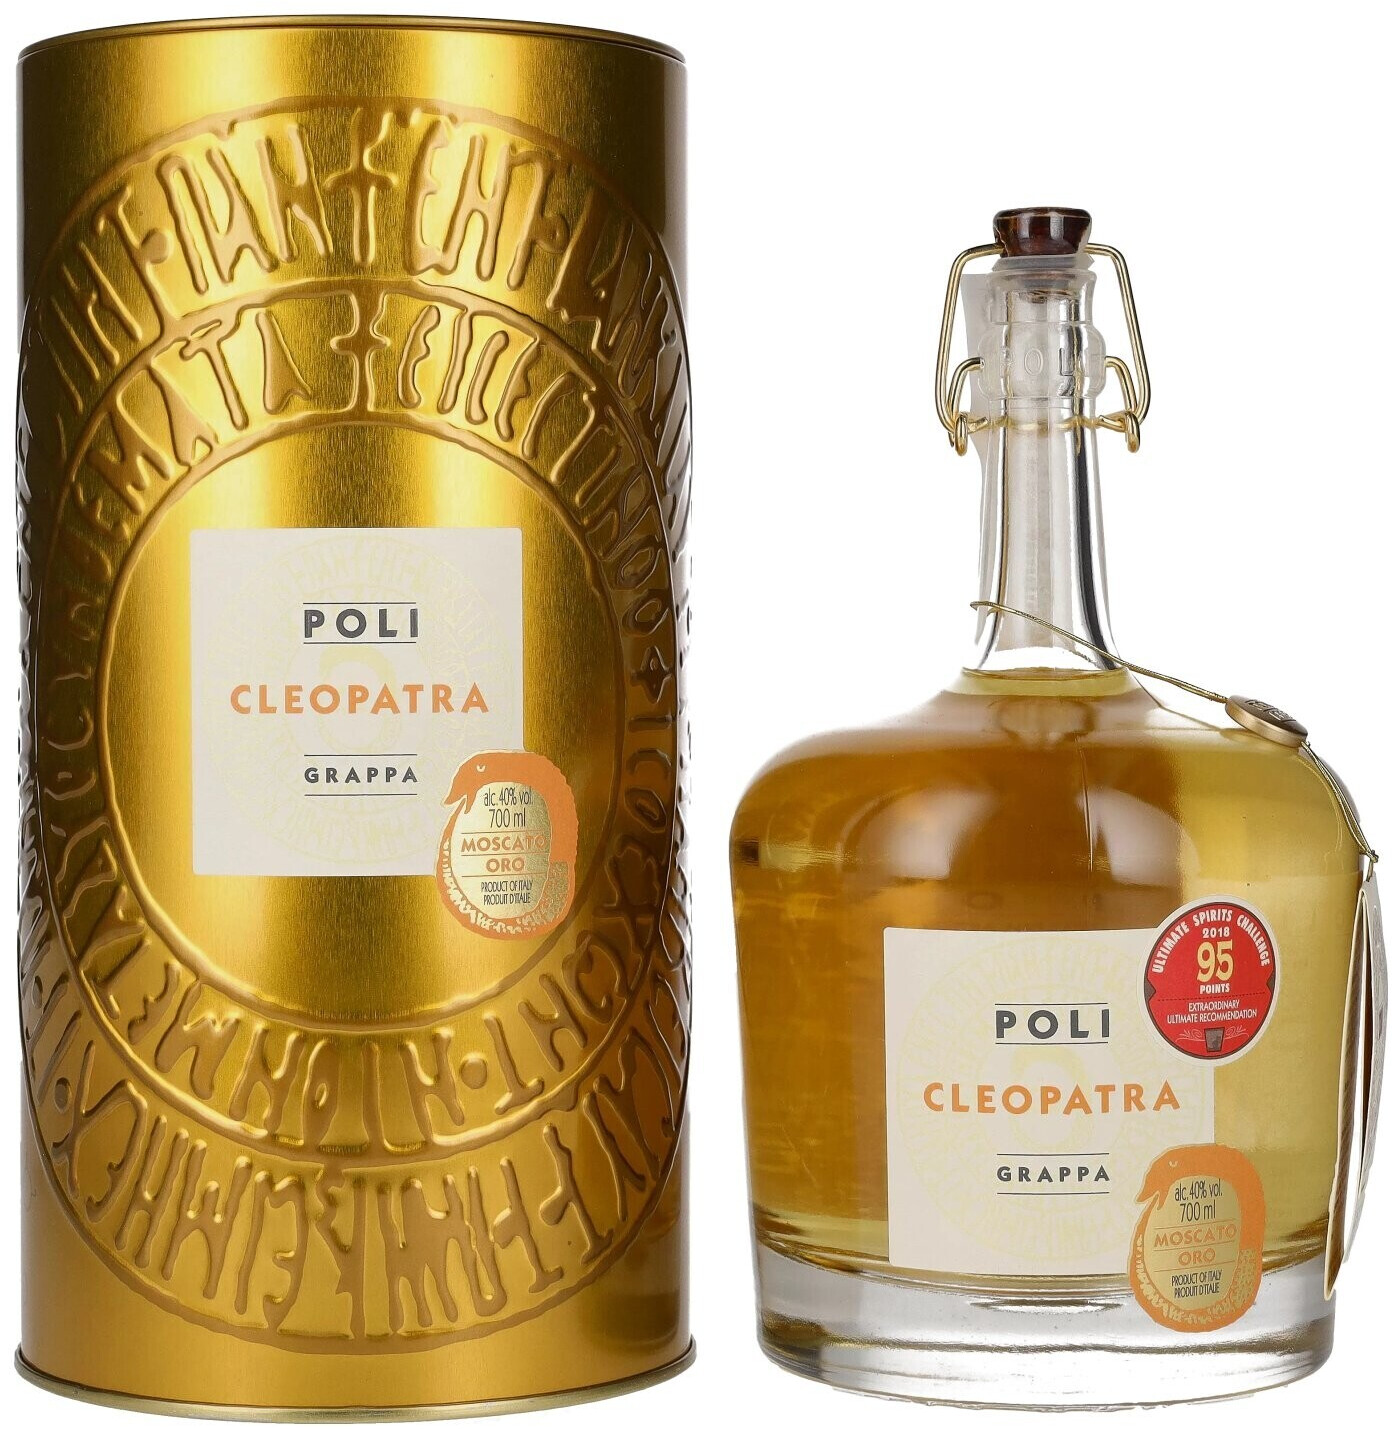 Cleopatra | Grappa 40% Oro Moscato € ab 35,40 Poli Preisvergleich 0,7l bei Jacopo